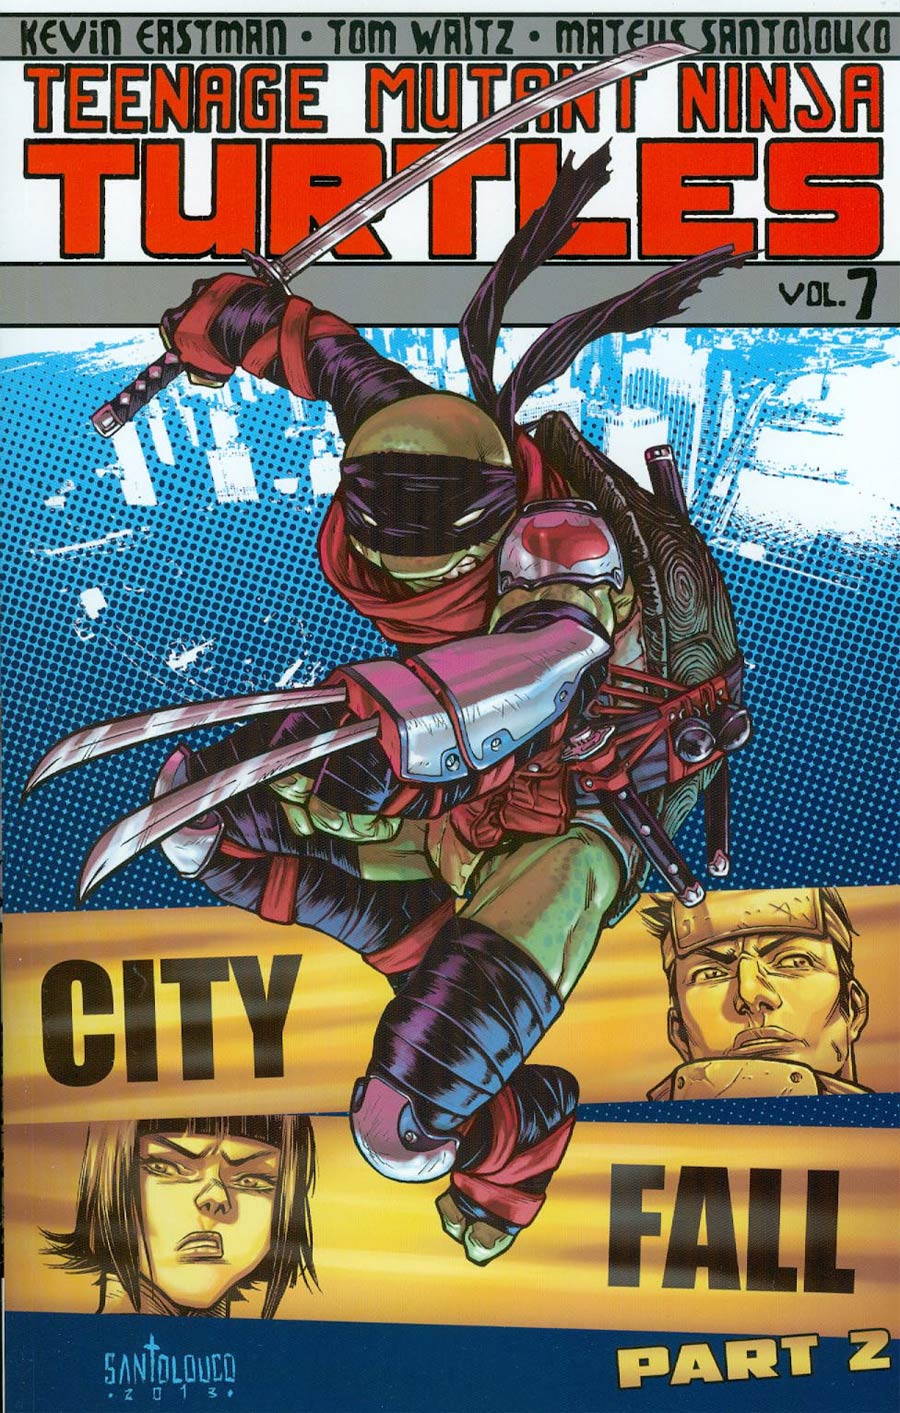 Teenage Mutant Ninja Turtles Ongoing Vol 7 City Fall Part 2 TP